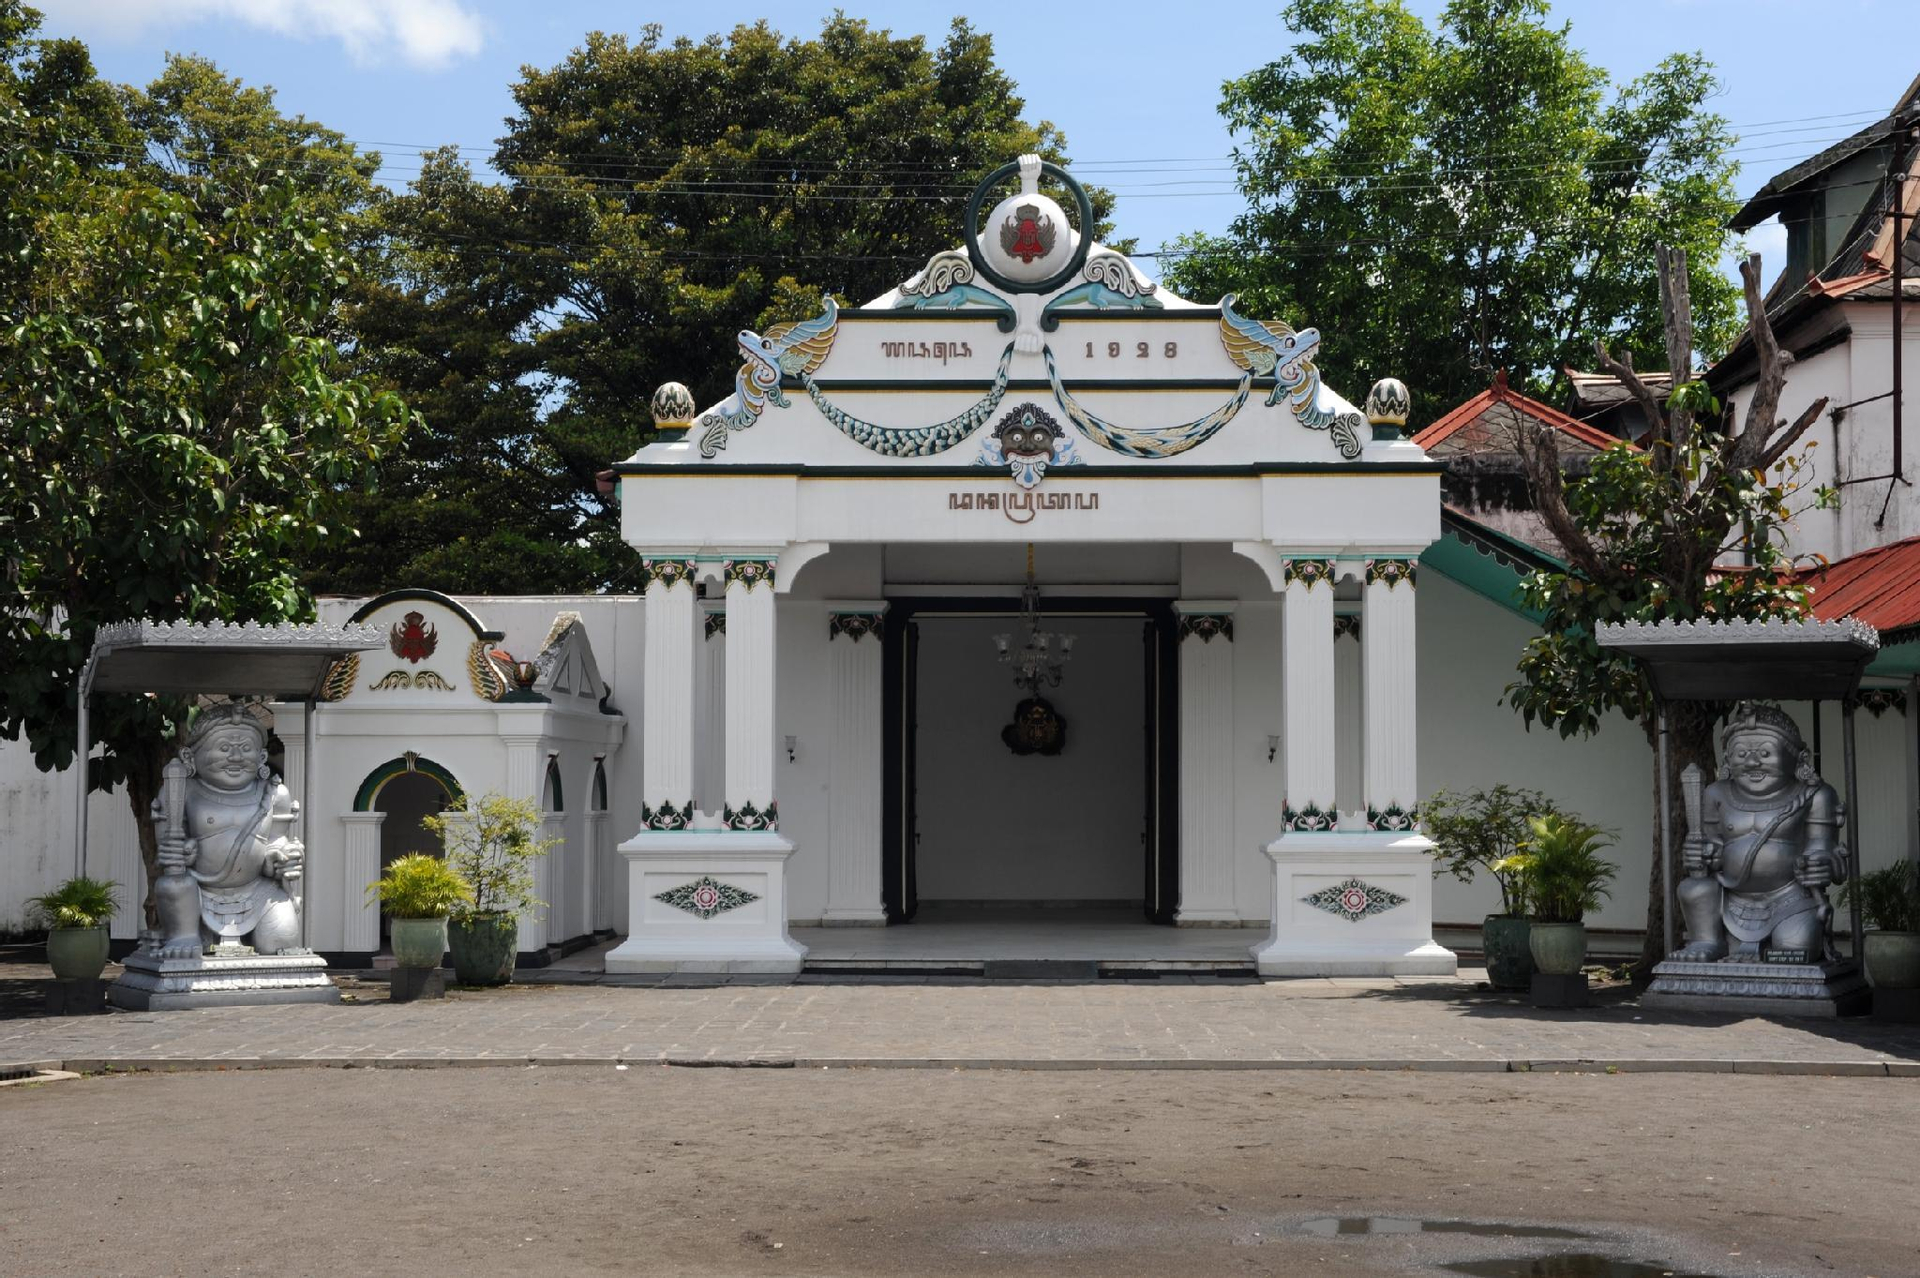 Exterior & Views 1, Homestay Jakal Dekat UGM dan Wisata by Simply Homy, Yogyakarta